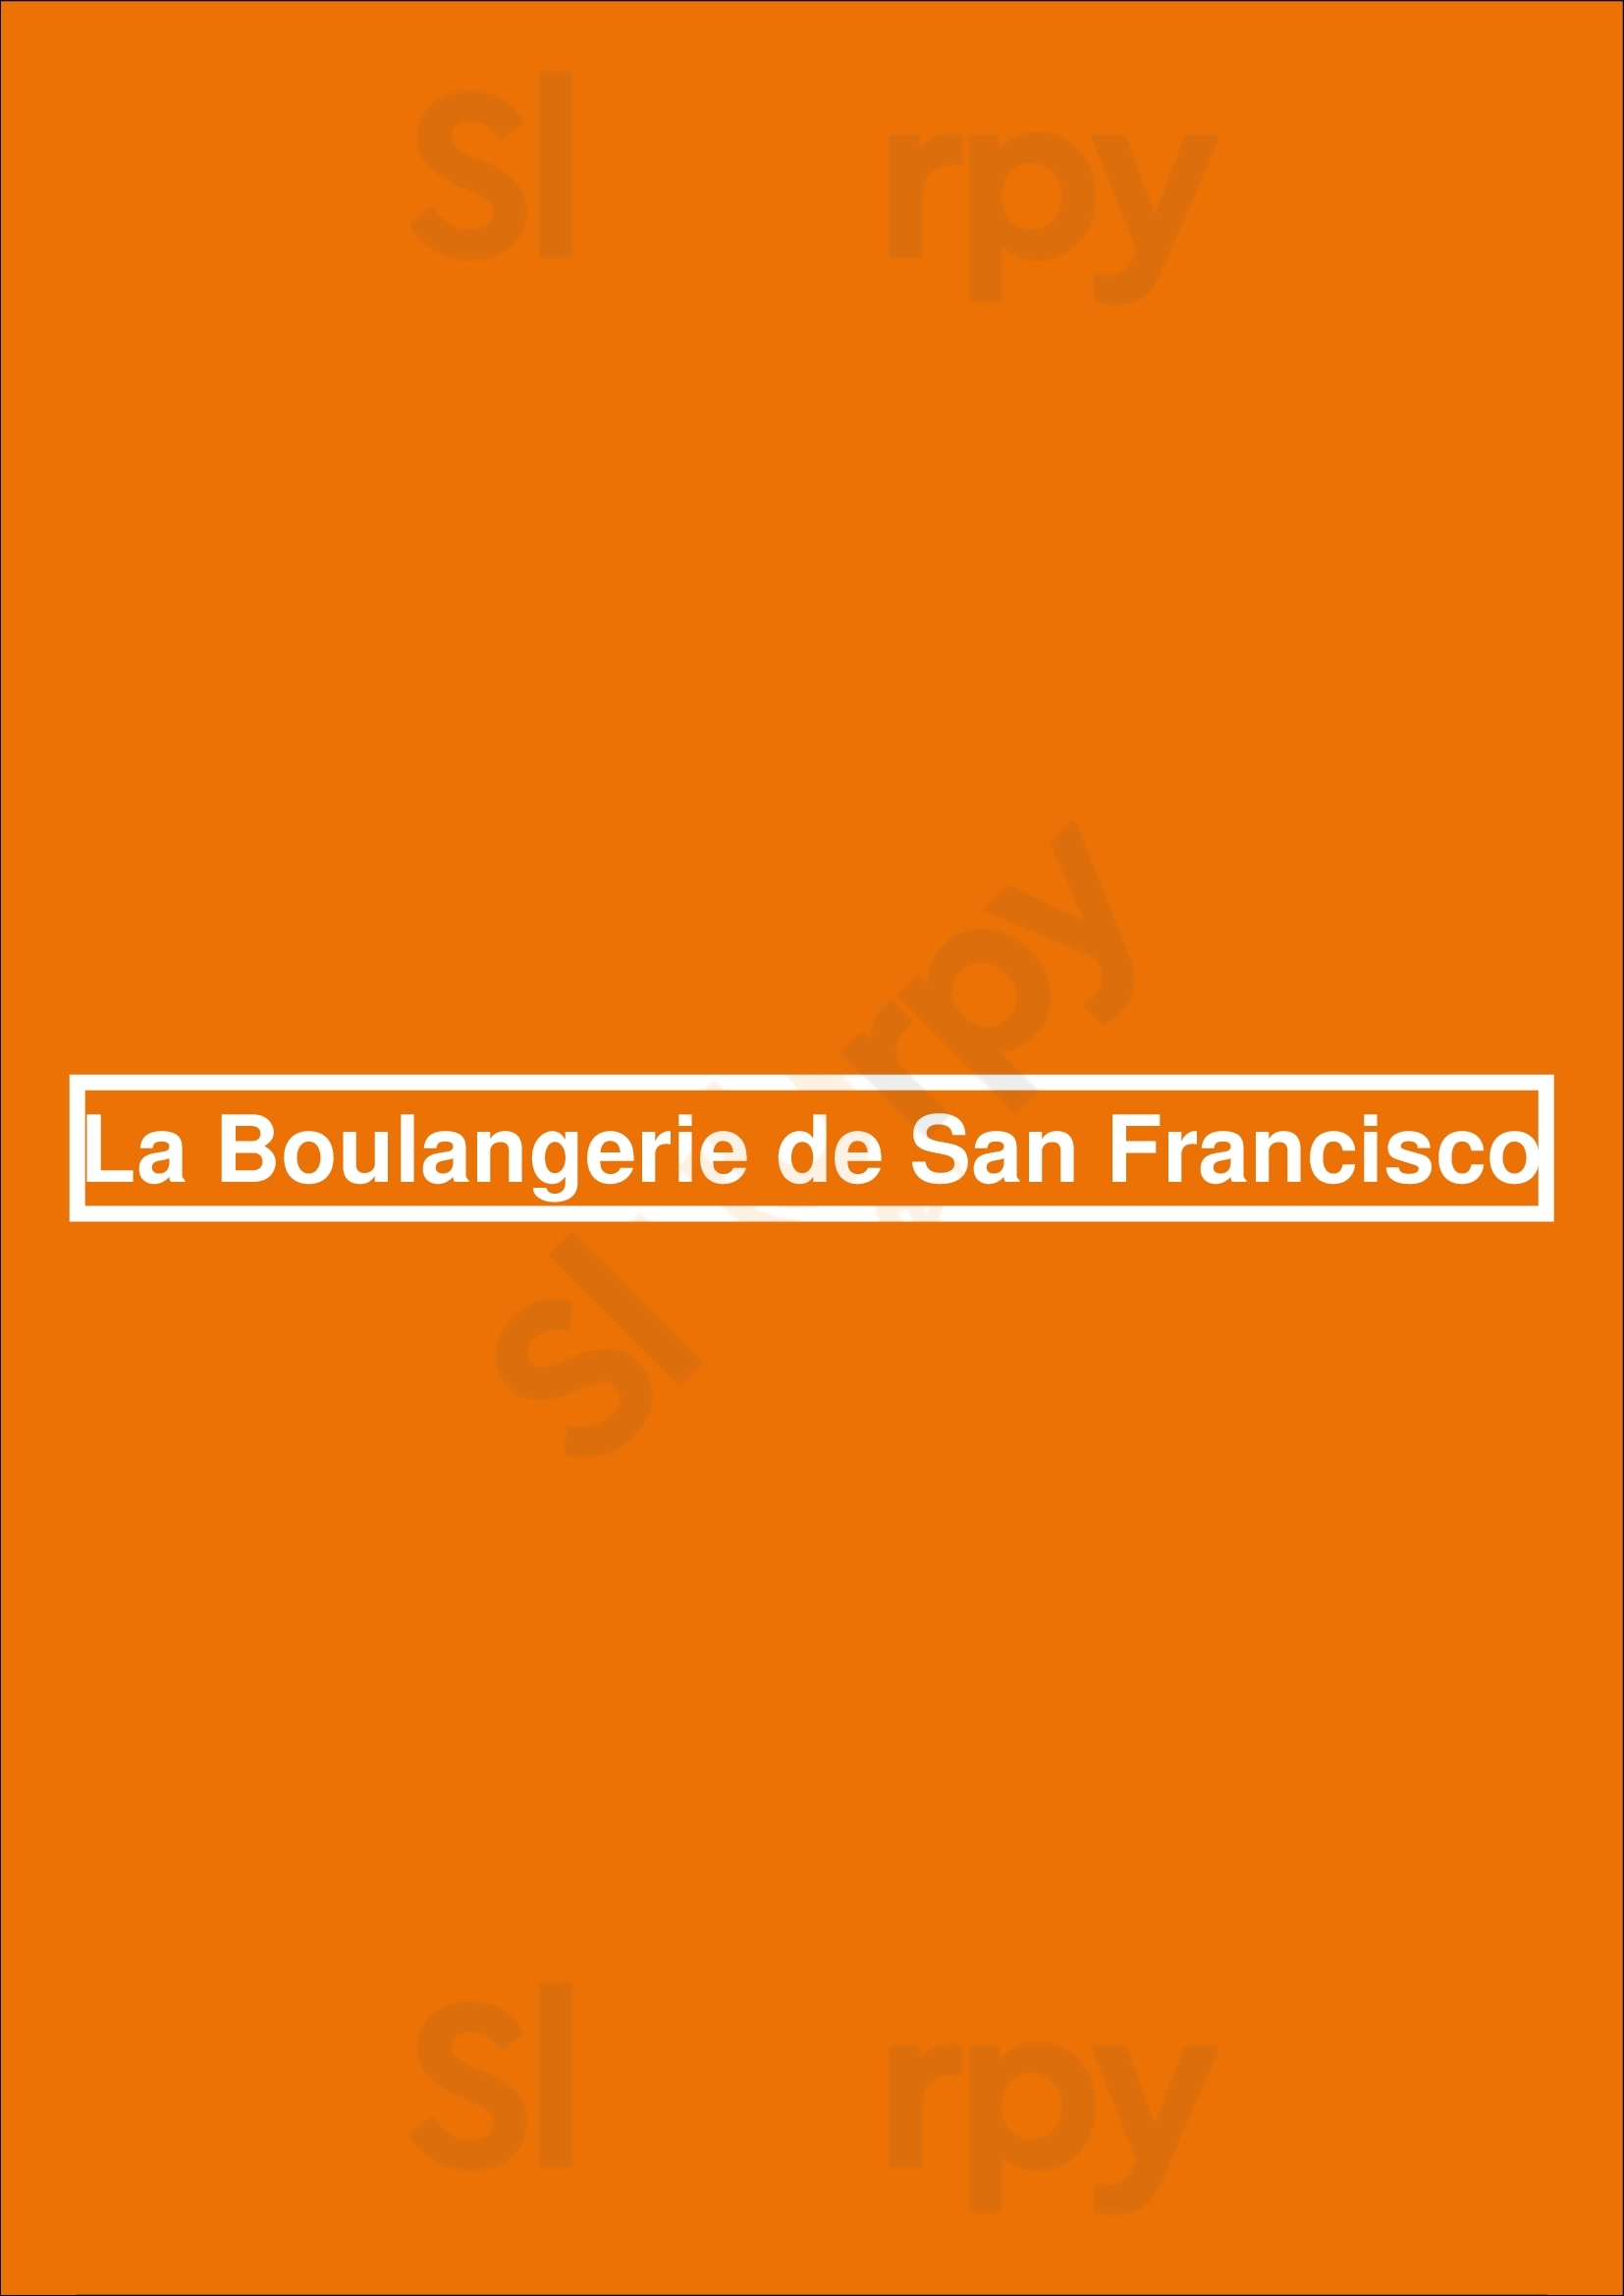 La Boulangerie De San Francisco San Francisco Menu - 1